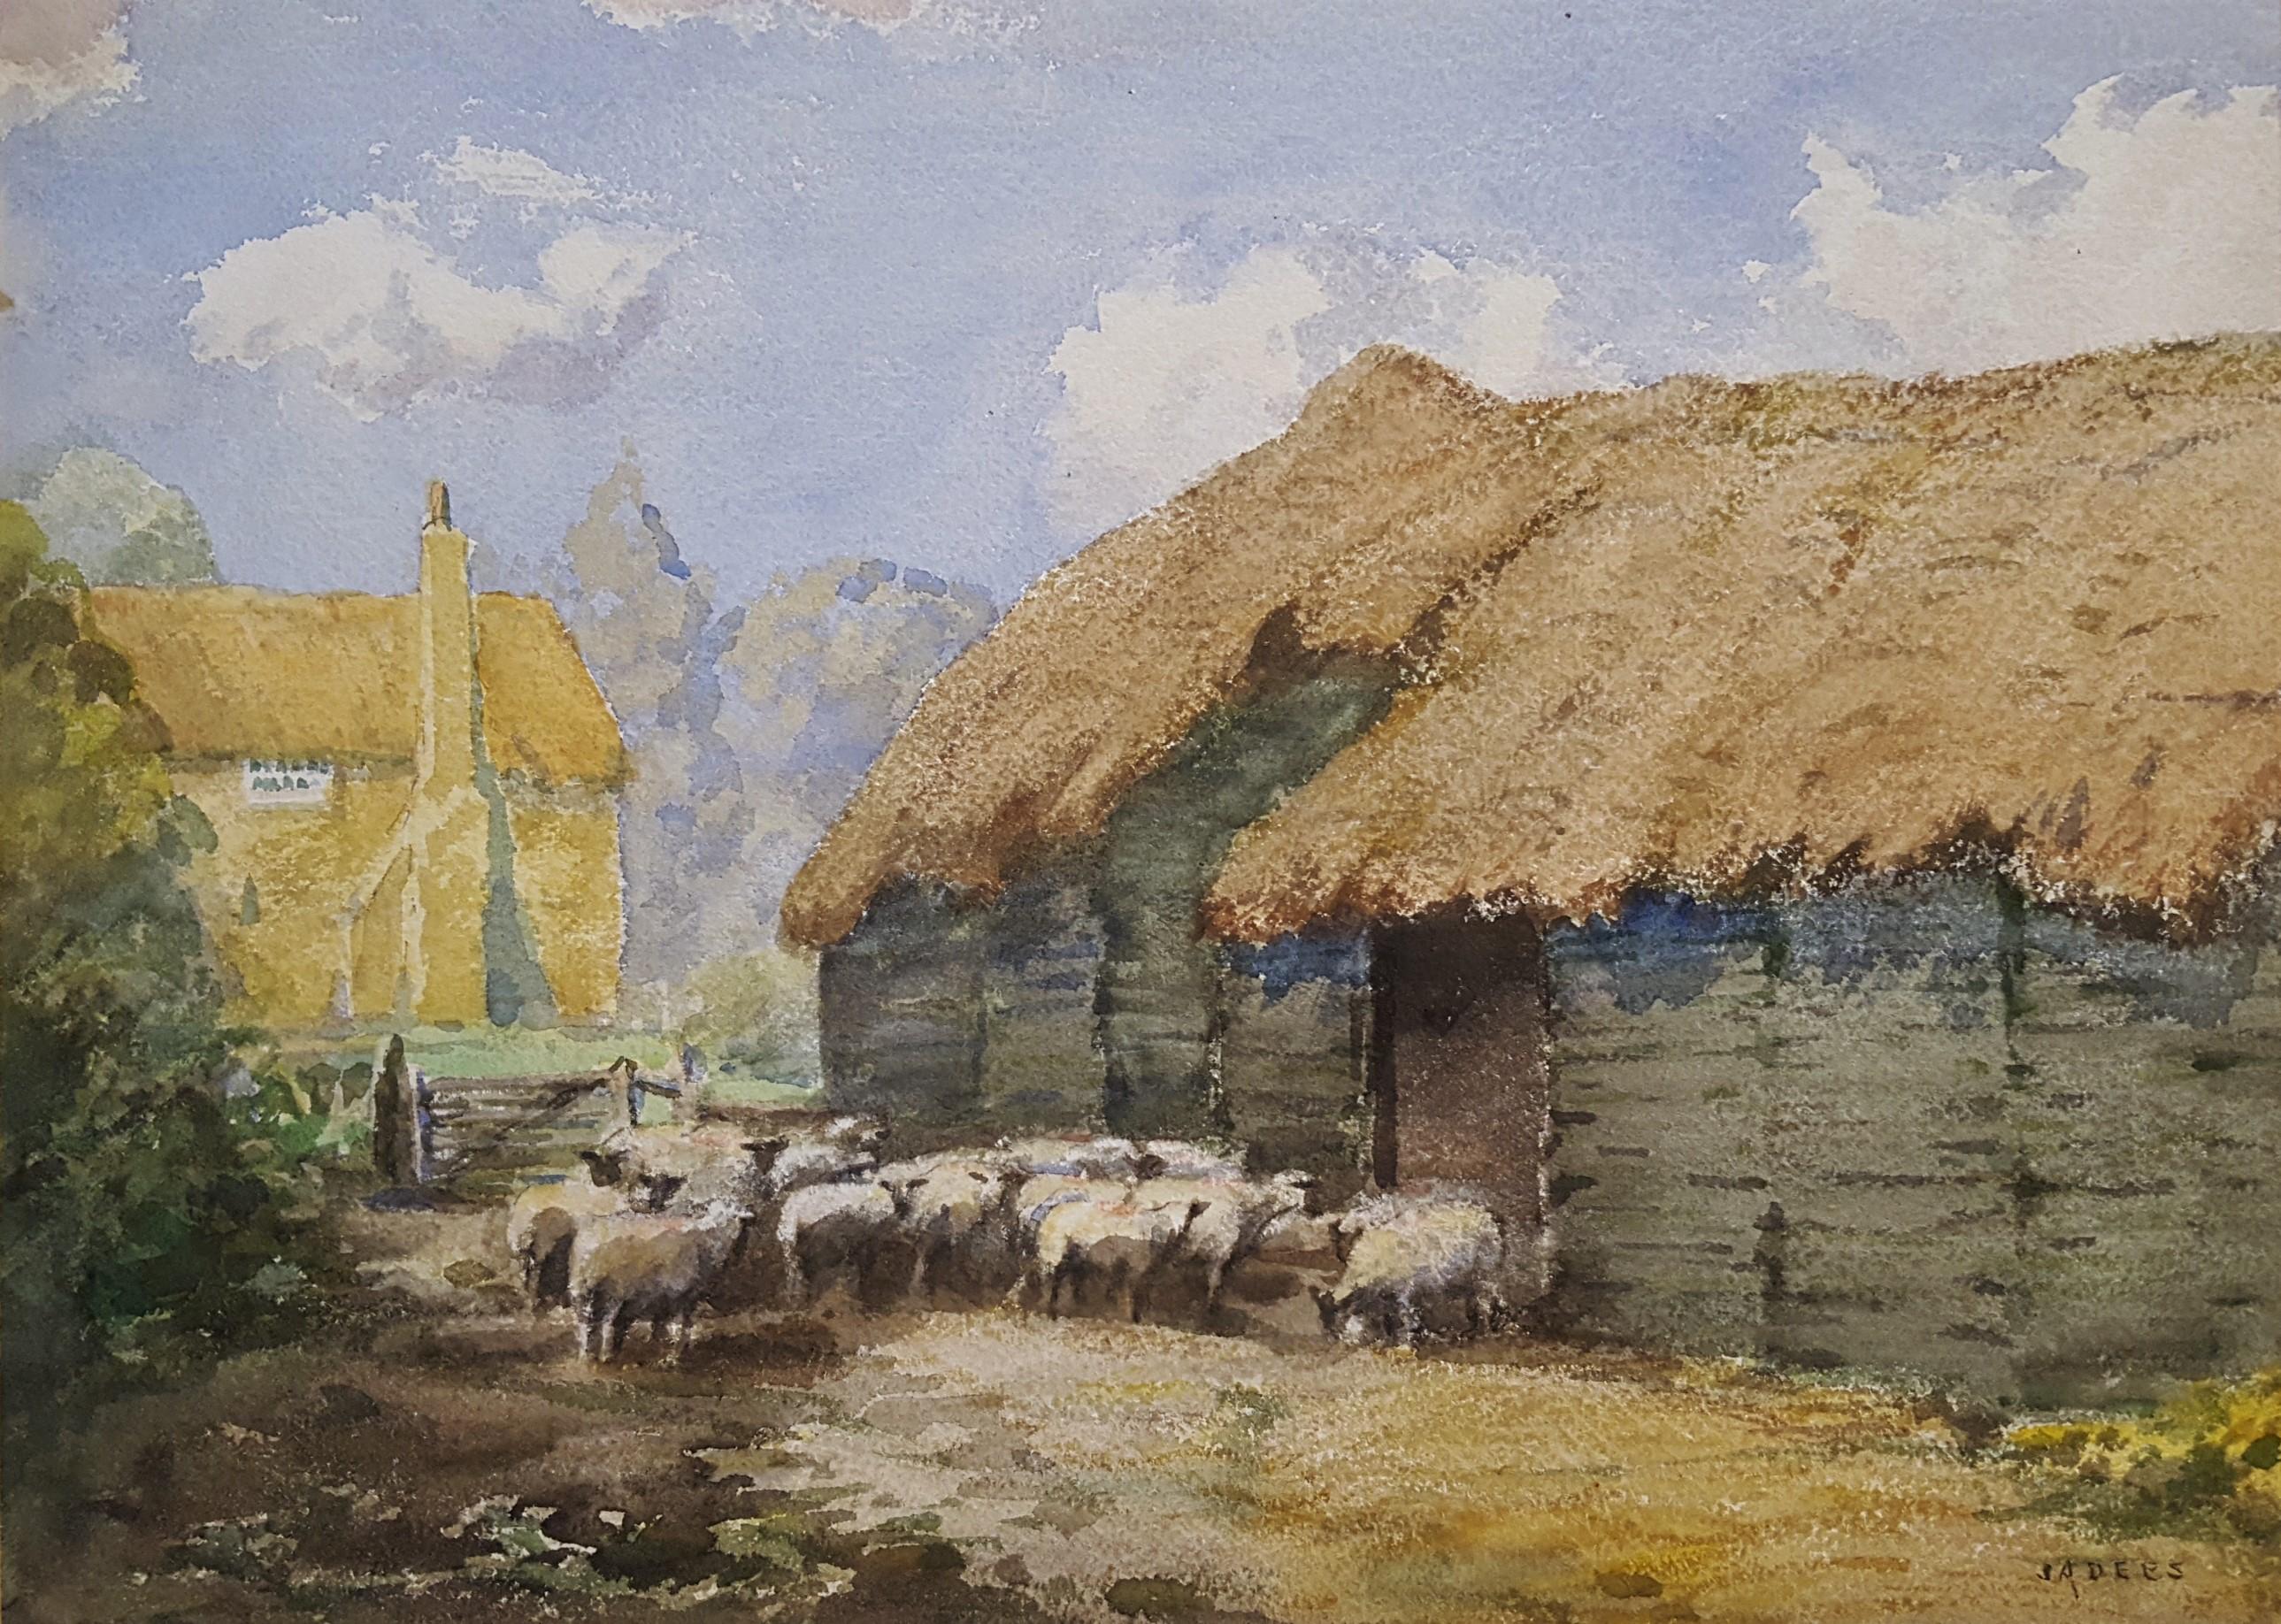 In Cambridgeshire /// British English Sheep Farm Cottage Village Watercolor Art